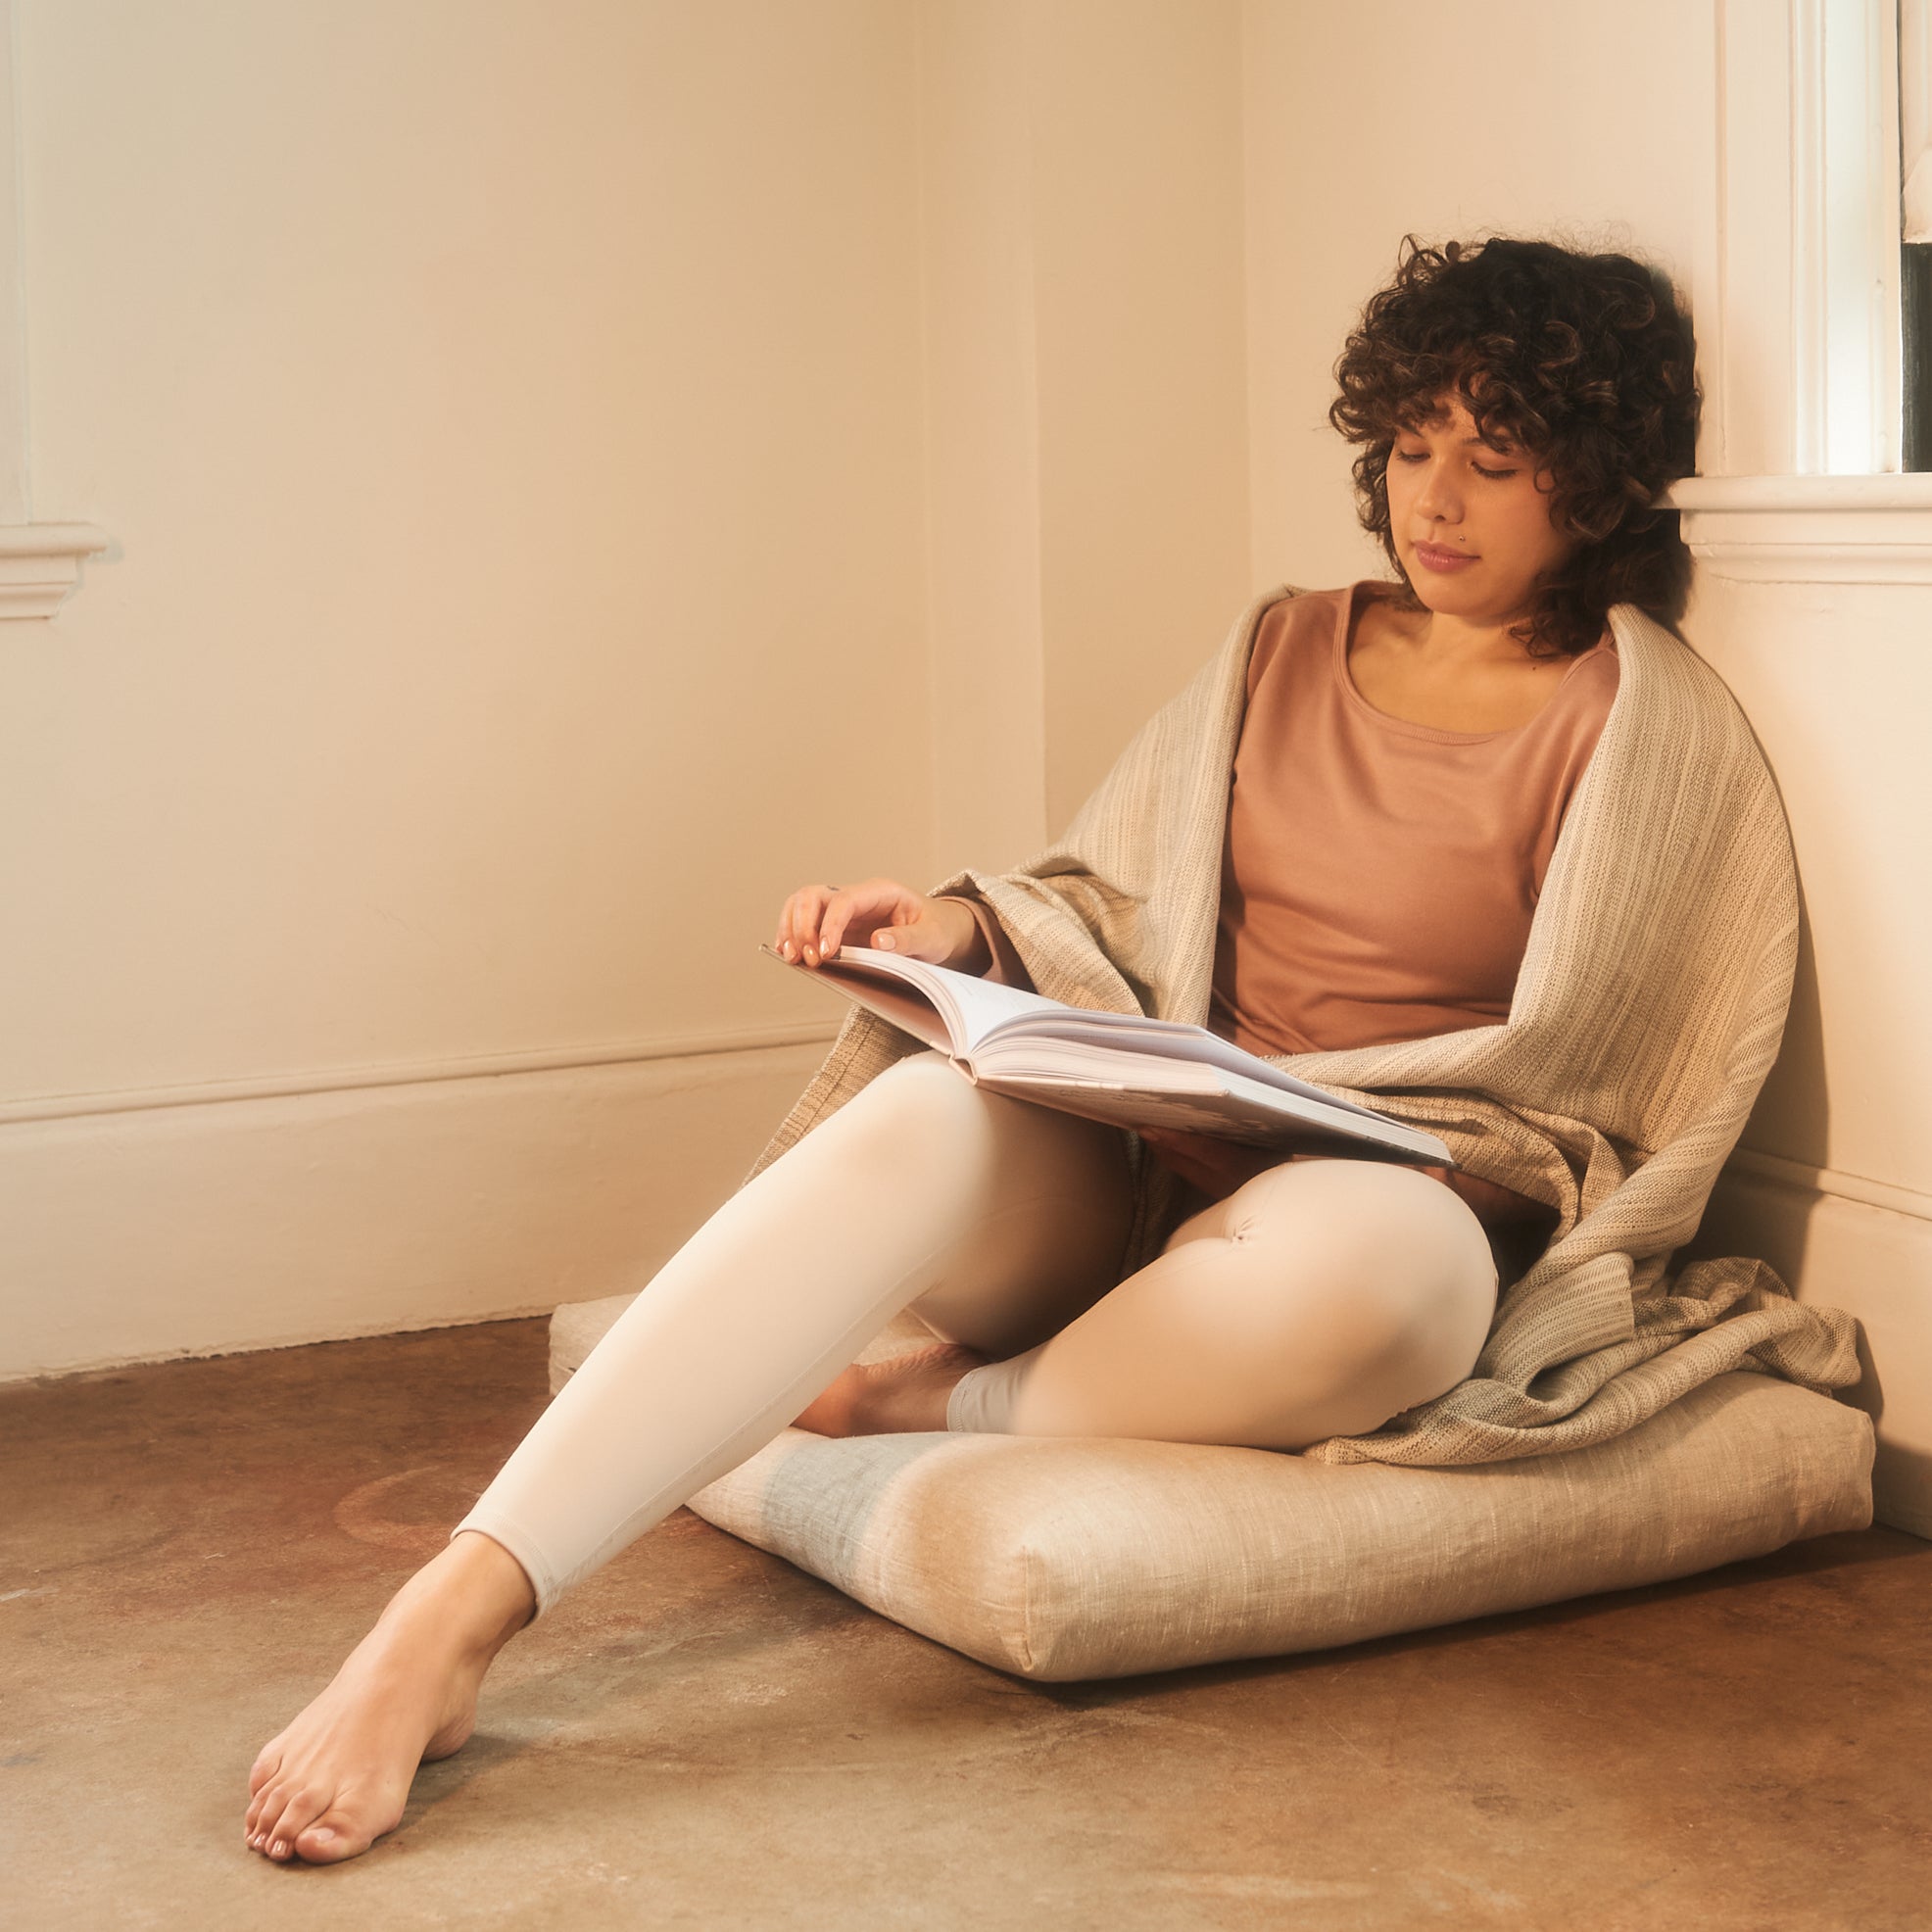 Halfmoon Melange Cotton Yoga Blanket - Gaiam